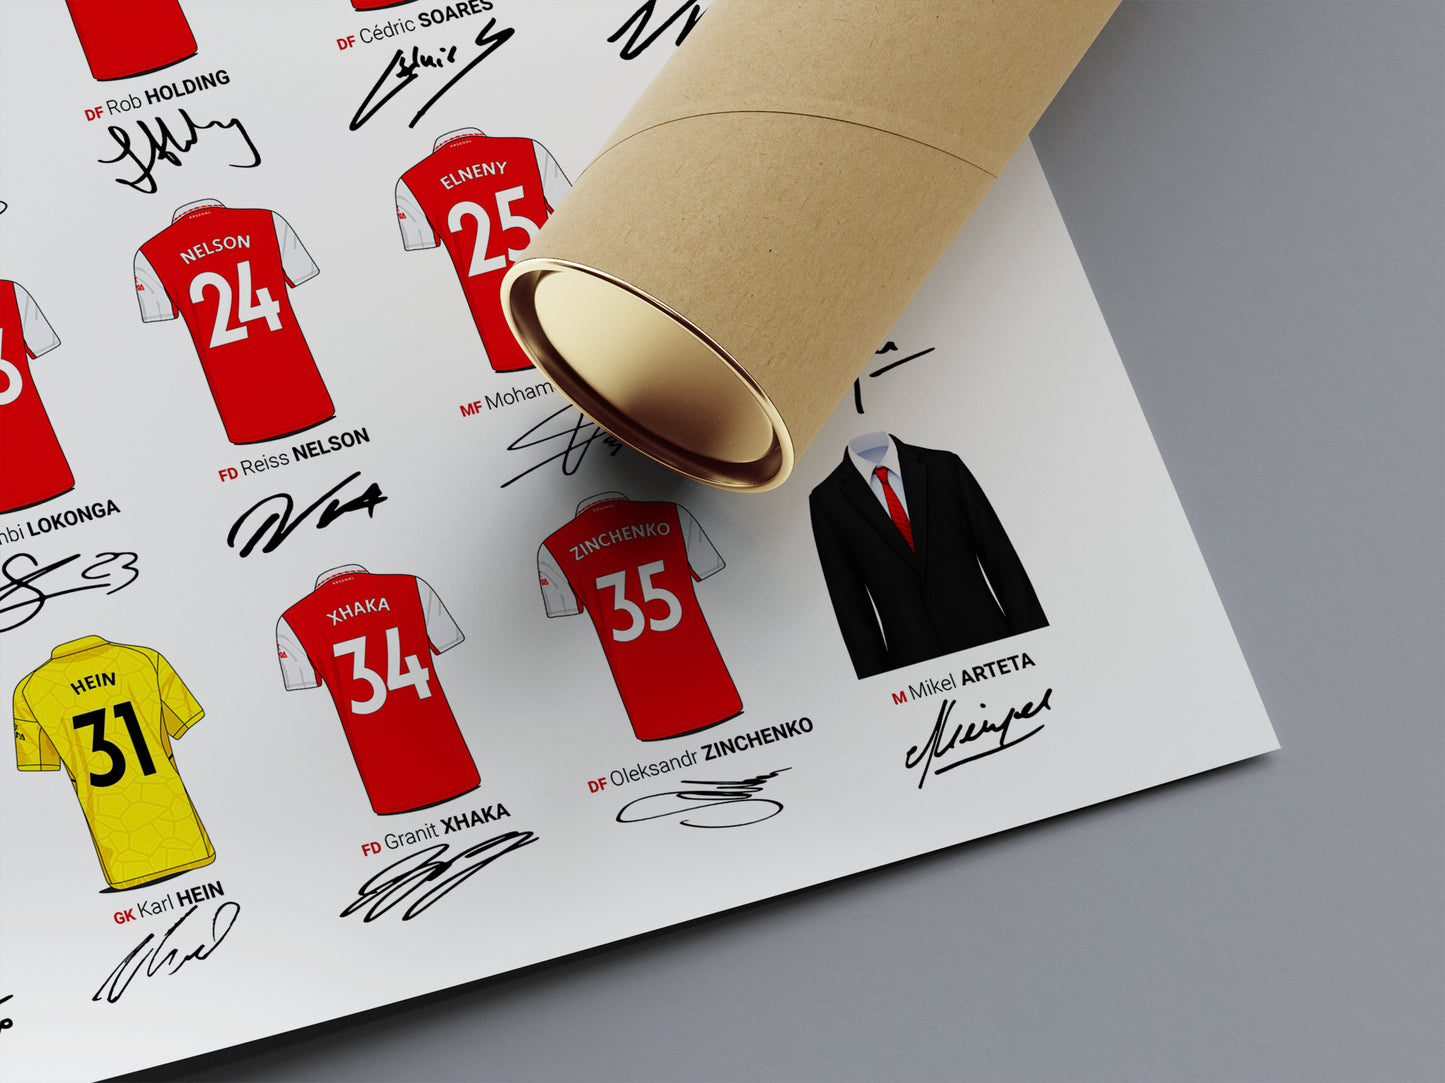 Arsenal Squad - 2022/23 Print